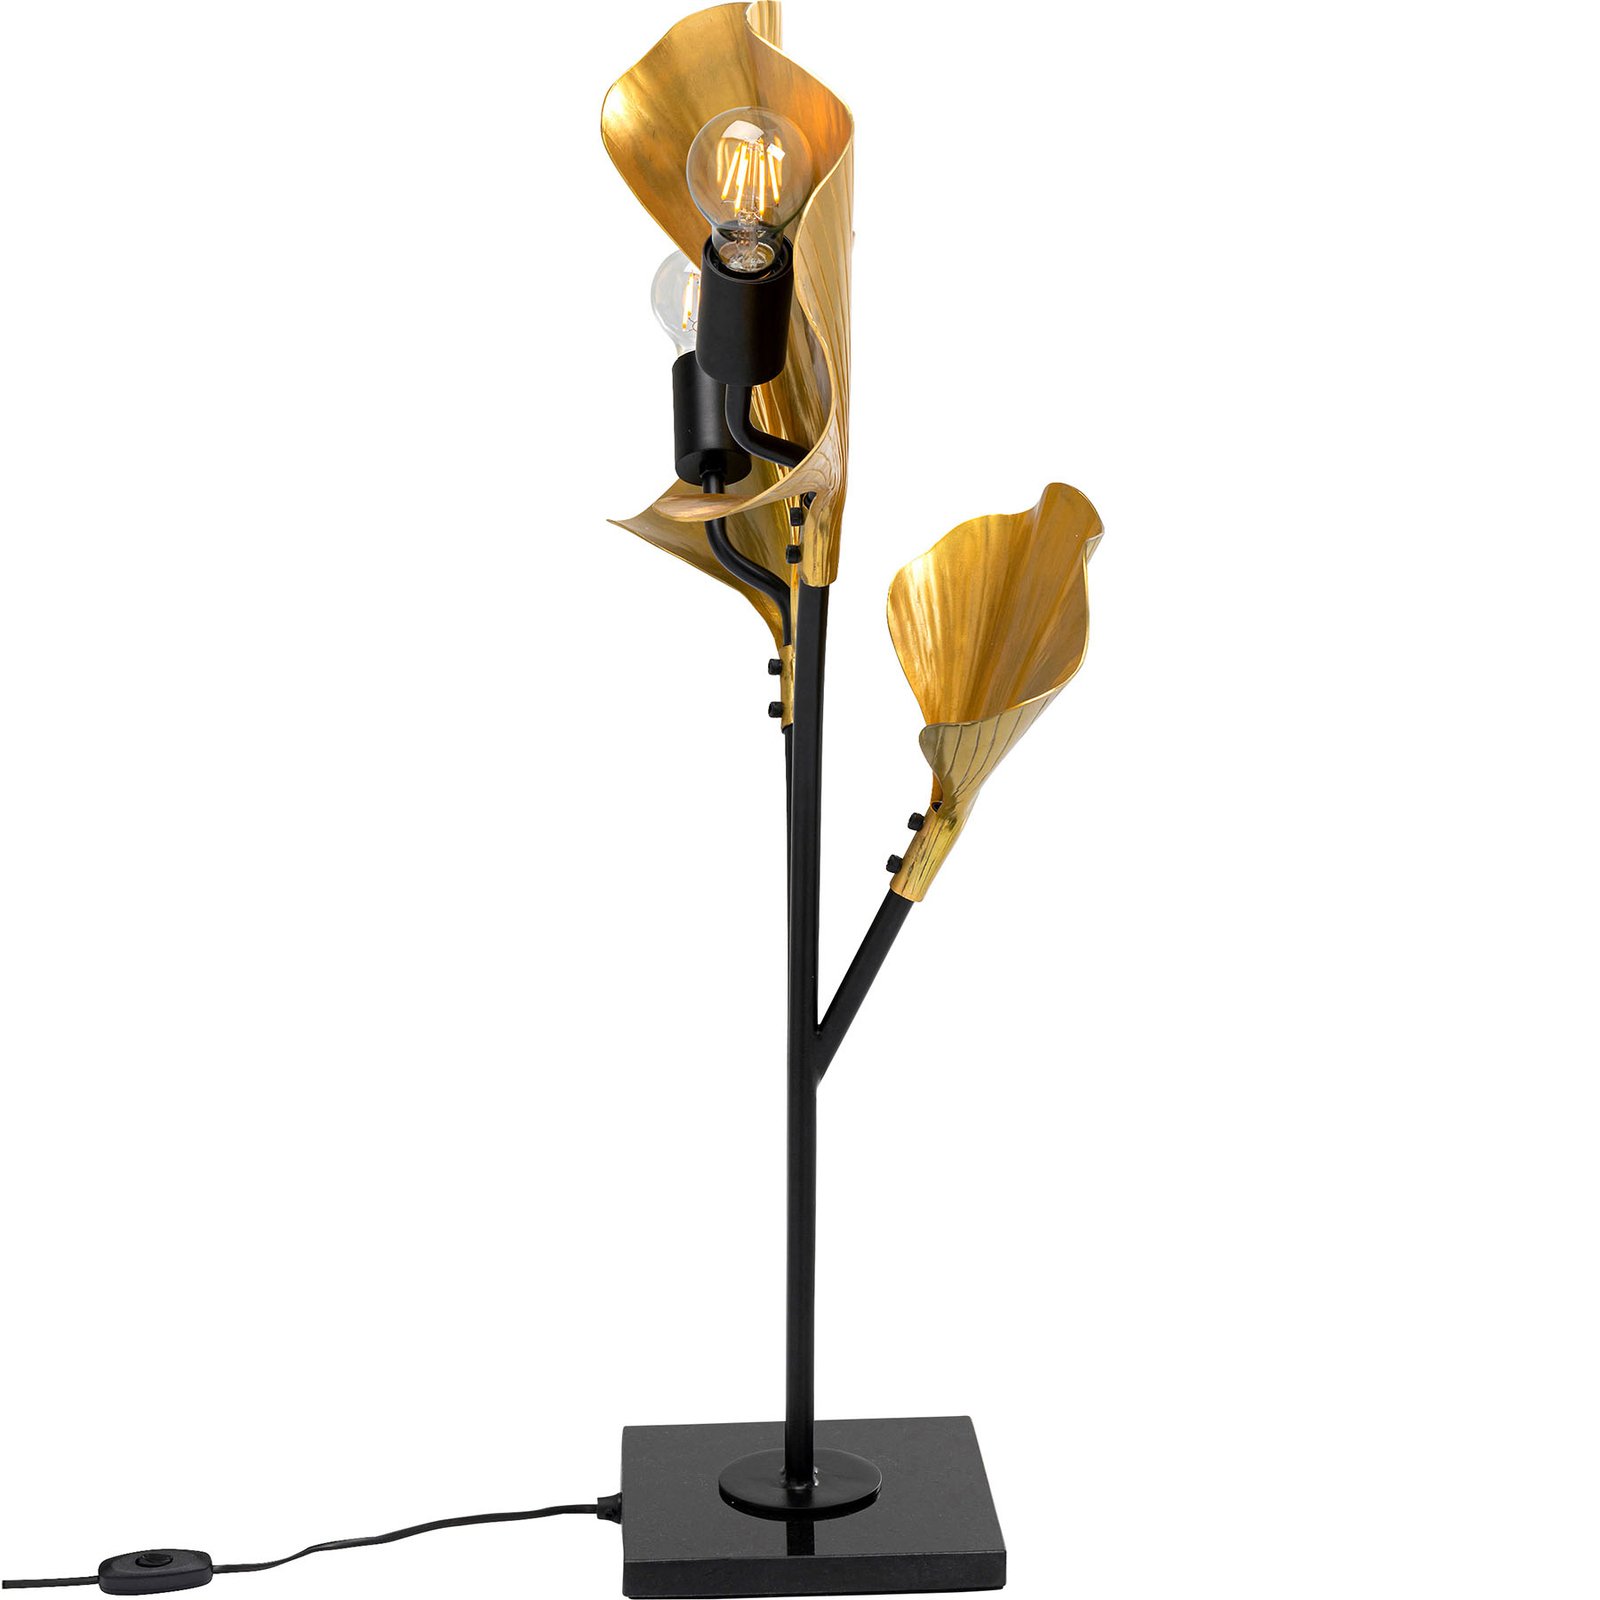 KARE Gingko Tre lampe à poser, hauteur 83 cm